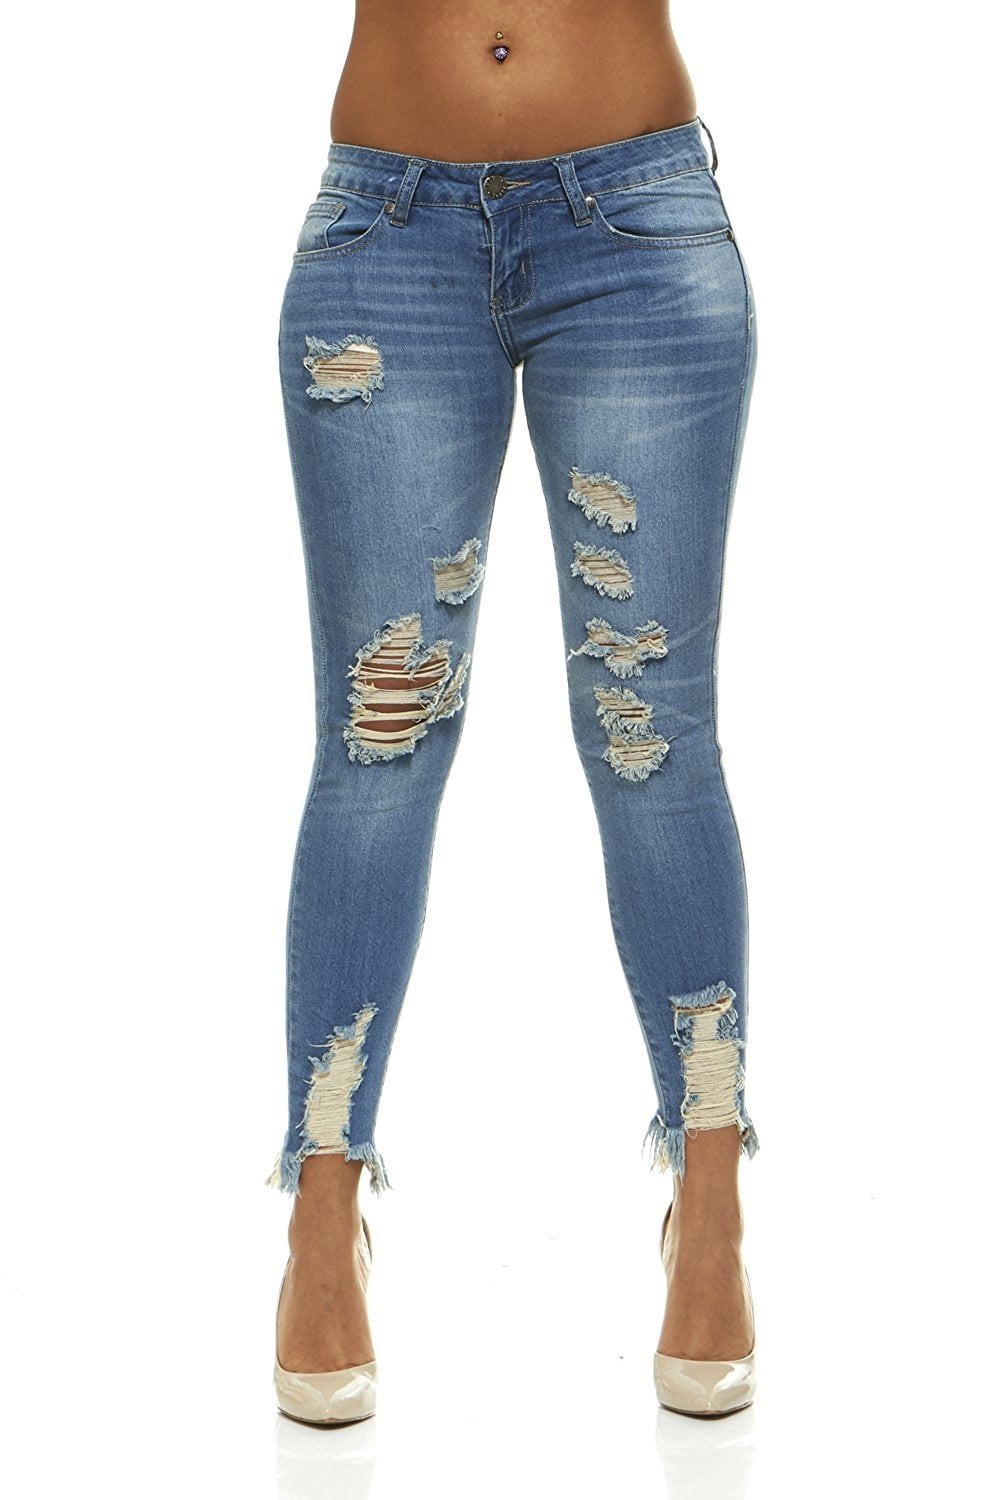 Cute Ripped Distressed Carp Denim Skinny Stretch Jeans for Women Plus ...